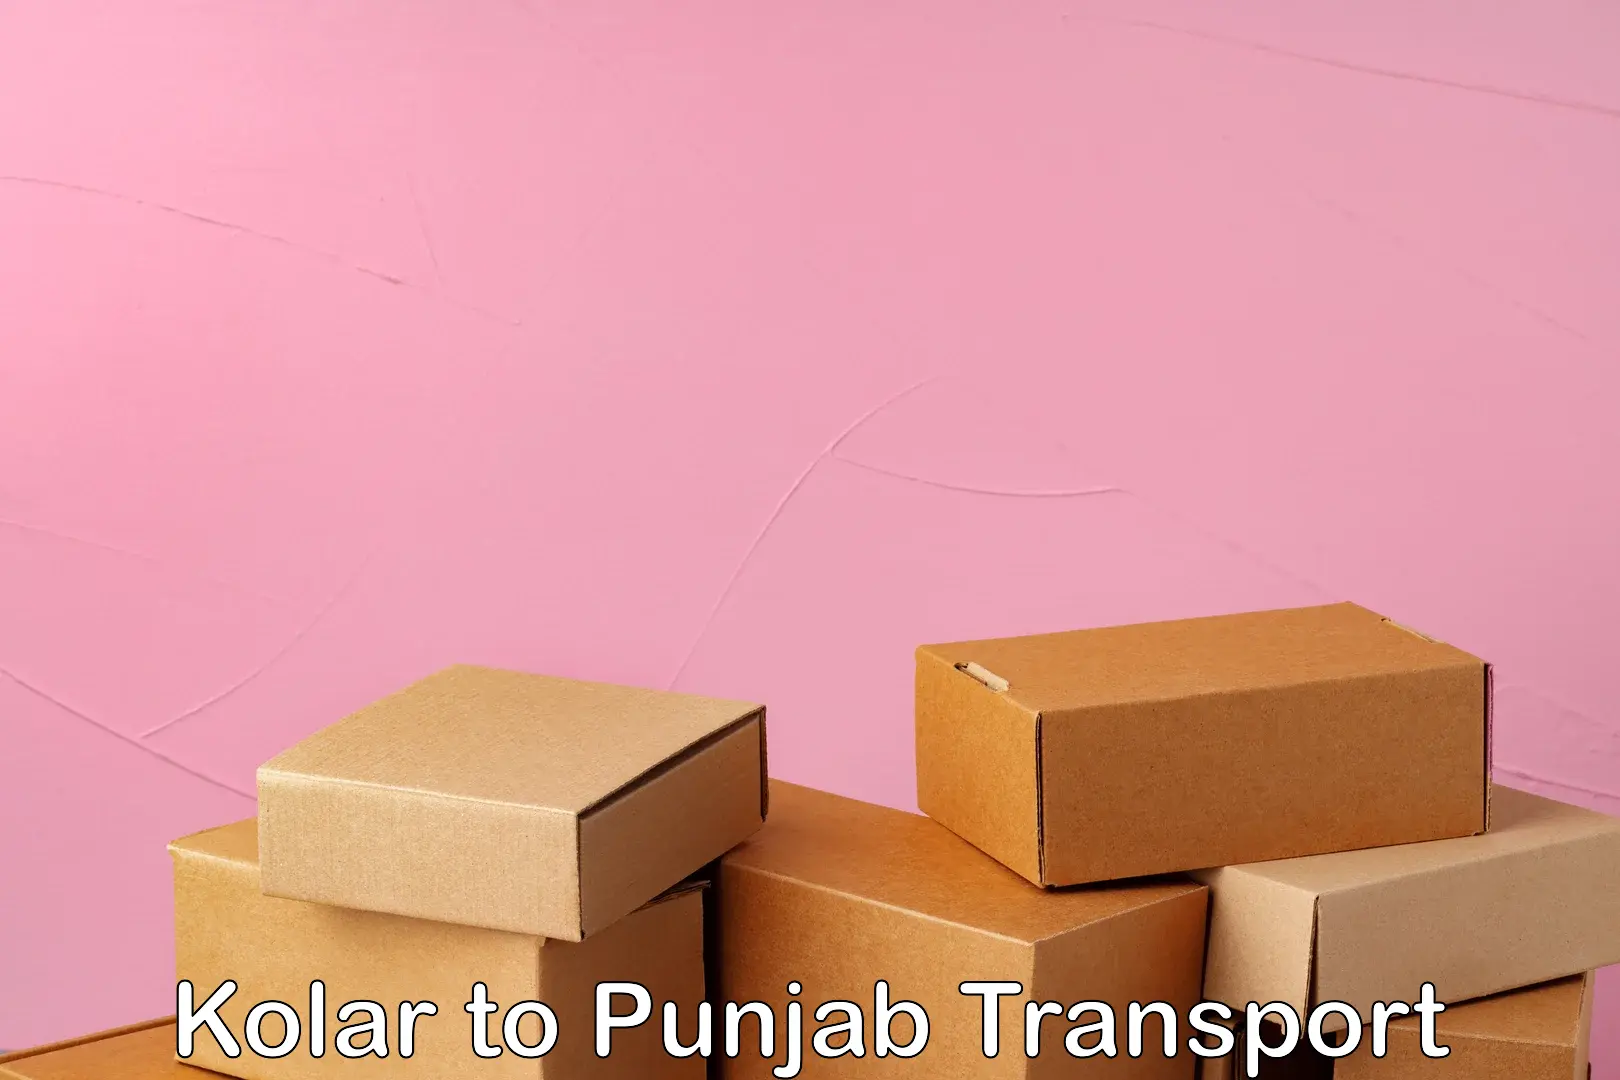 Commercial transport service Kolar to Punjab